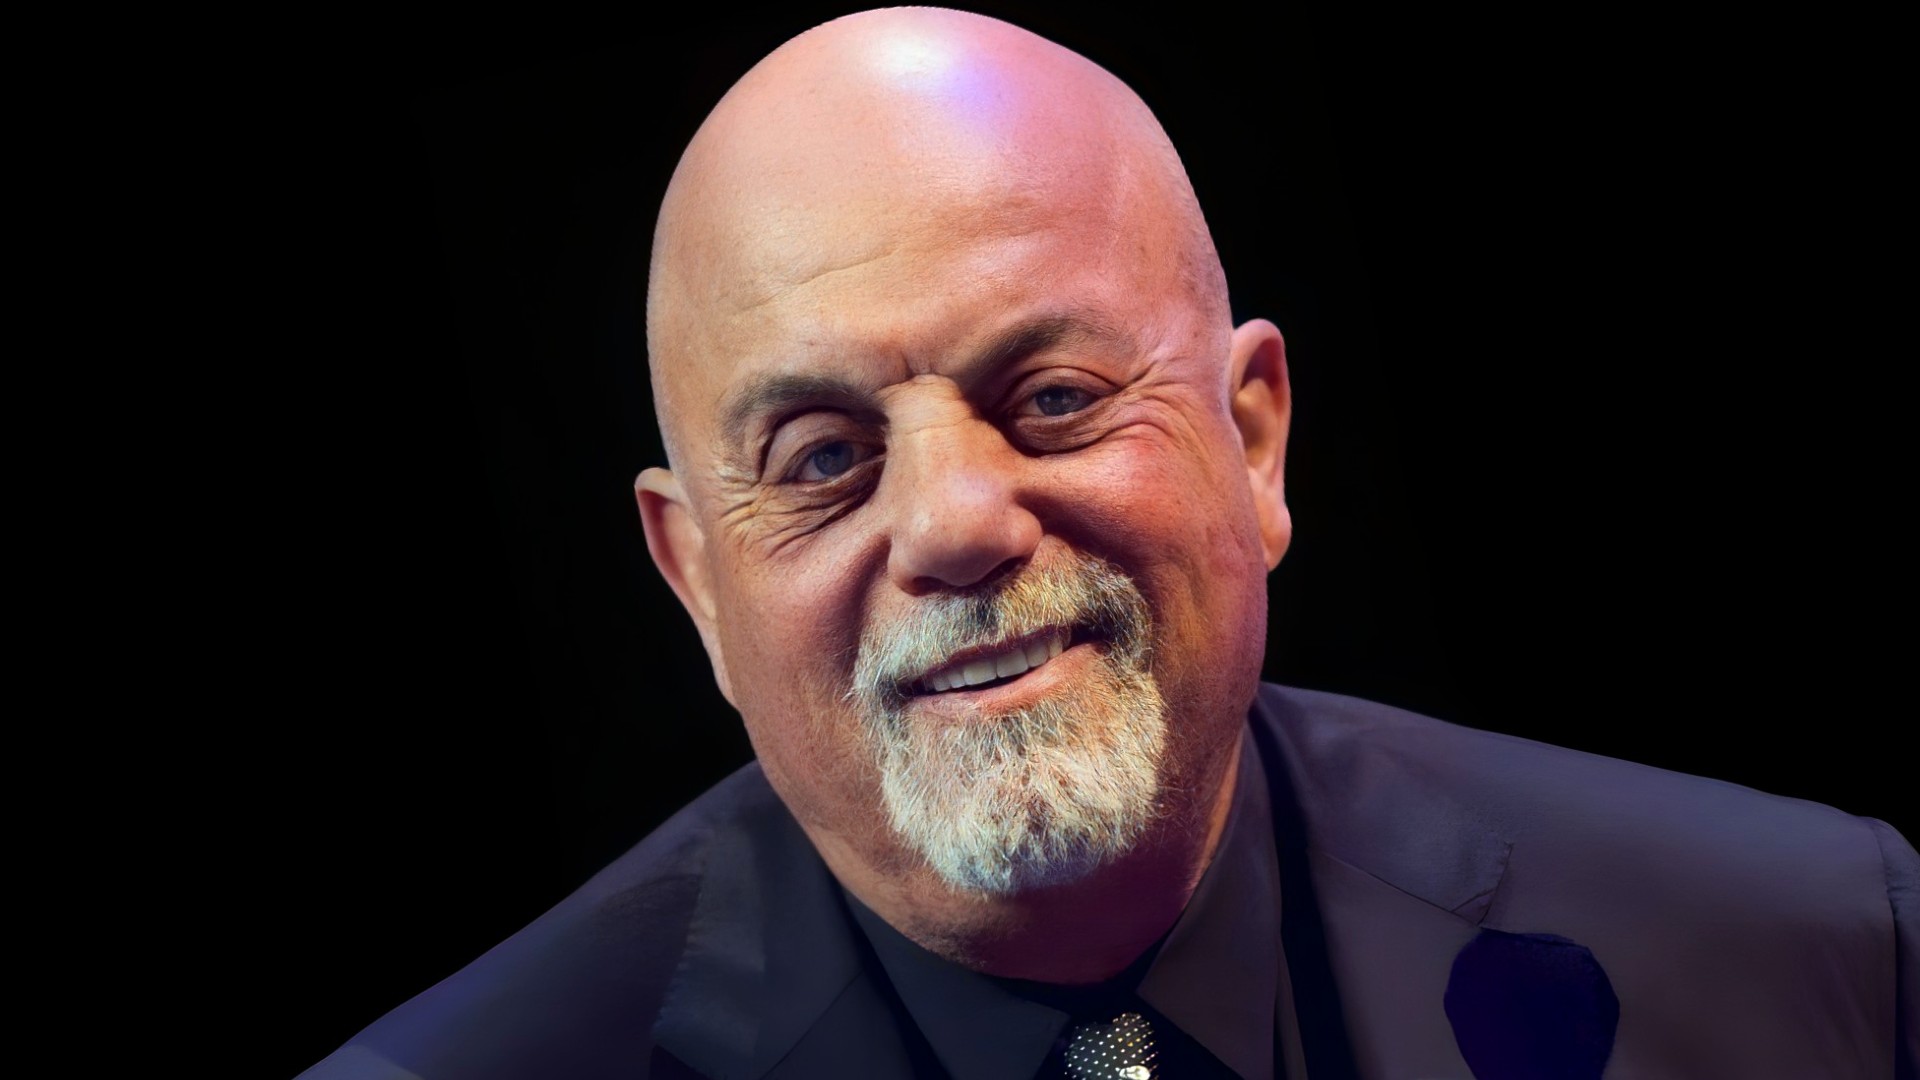 Has Billy Joel Undergone Plastic Surgery?